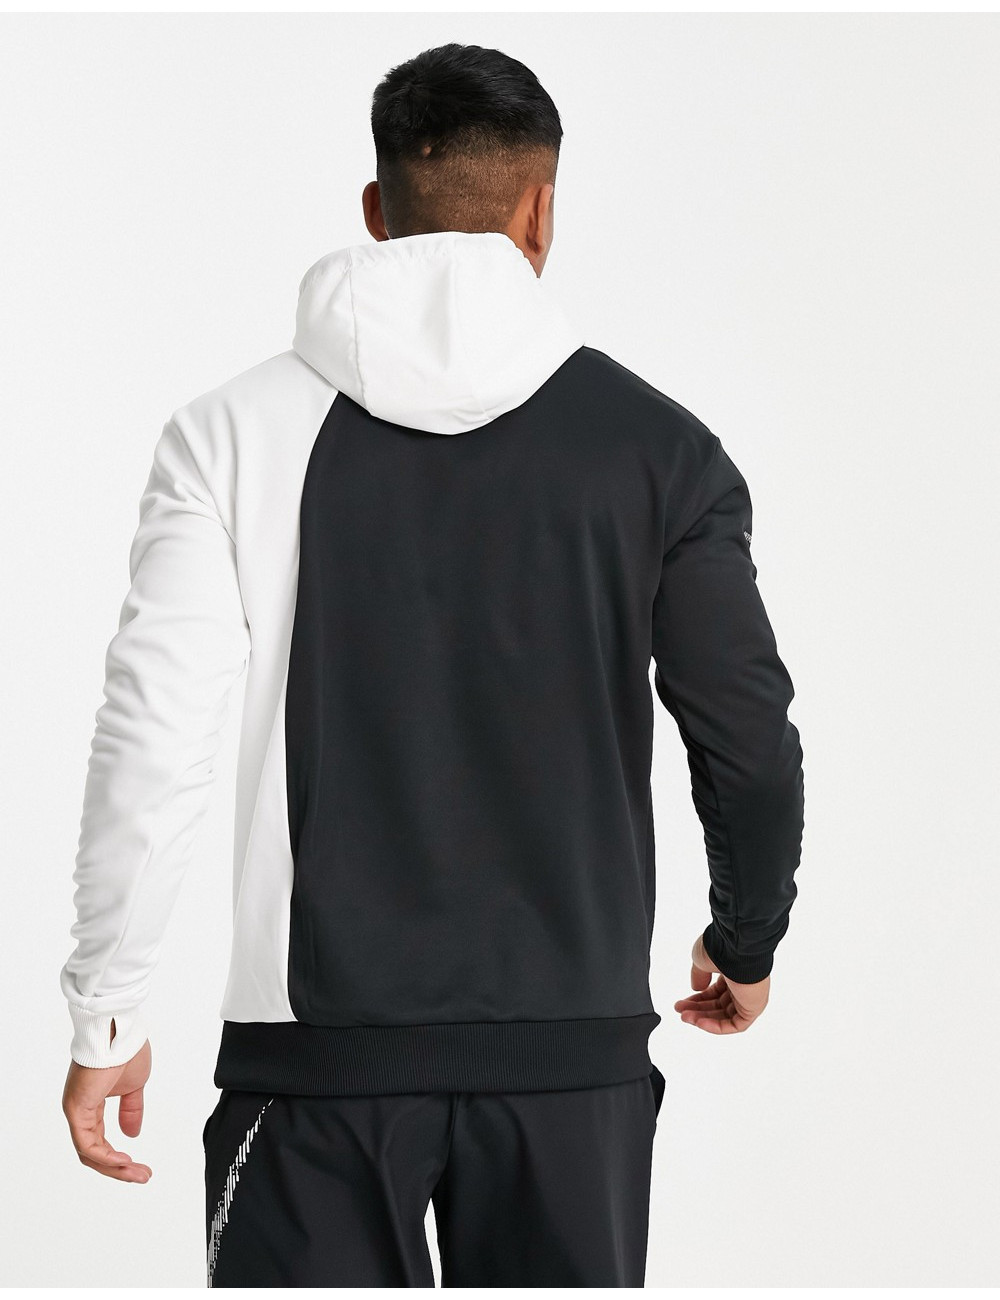 Nike Football hoodie in white